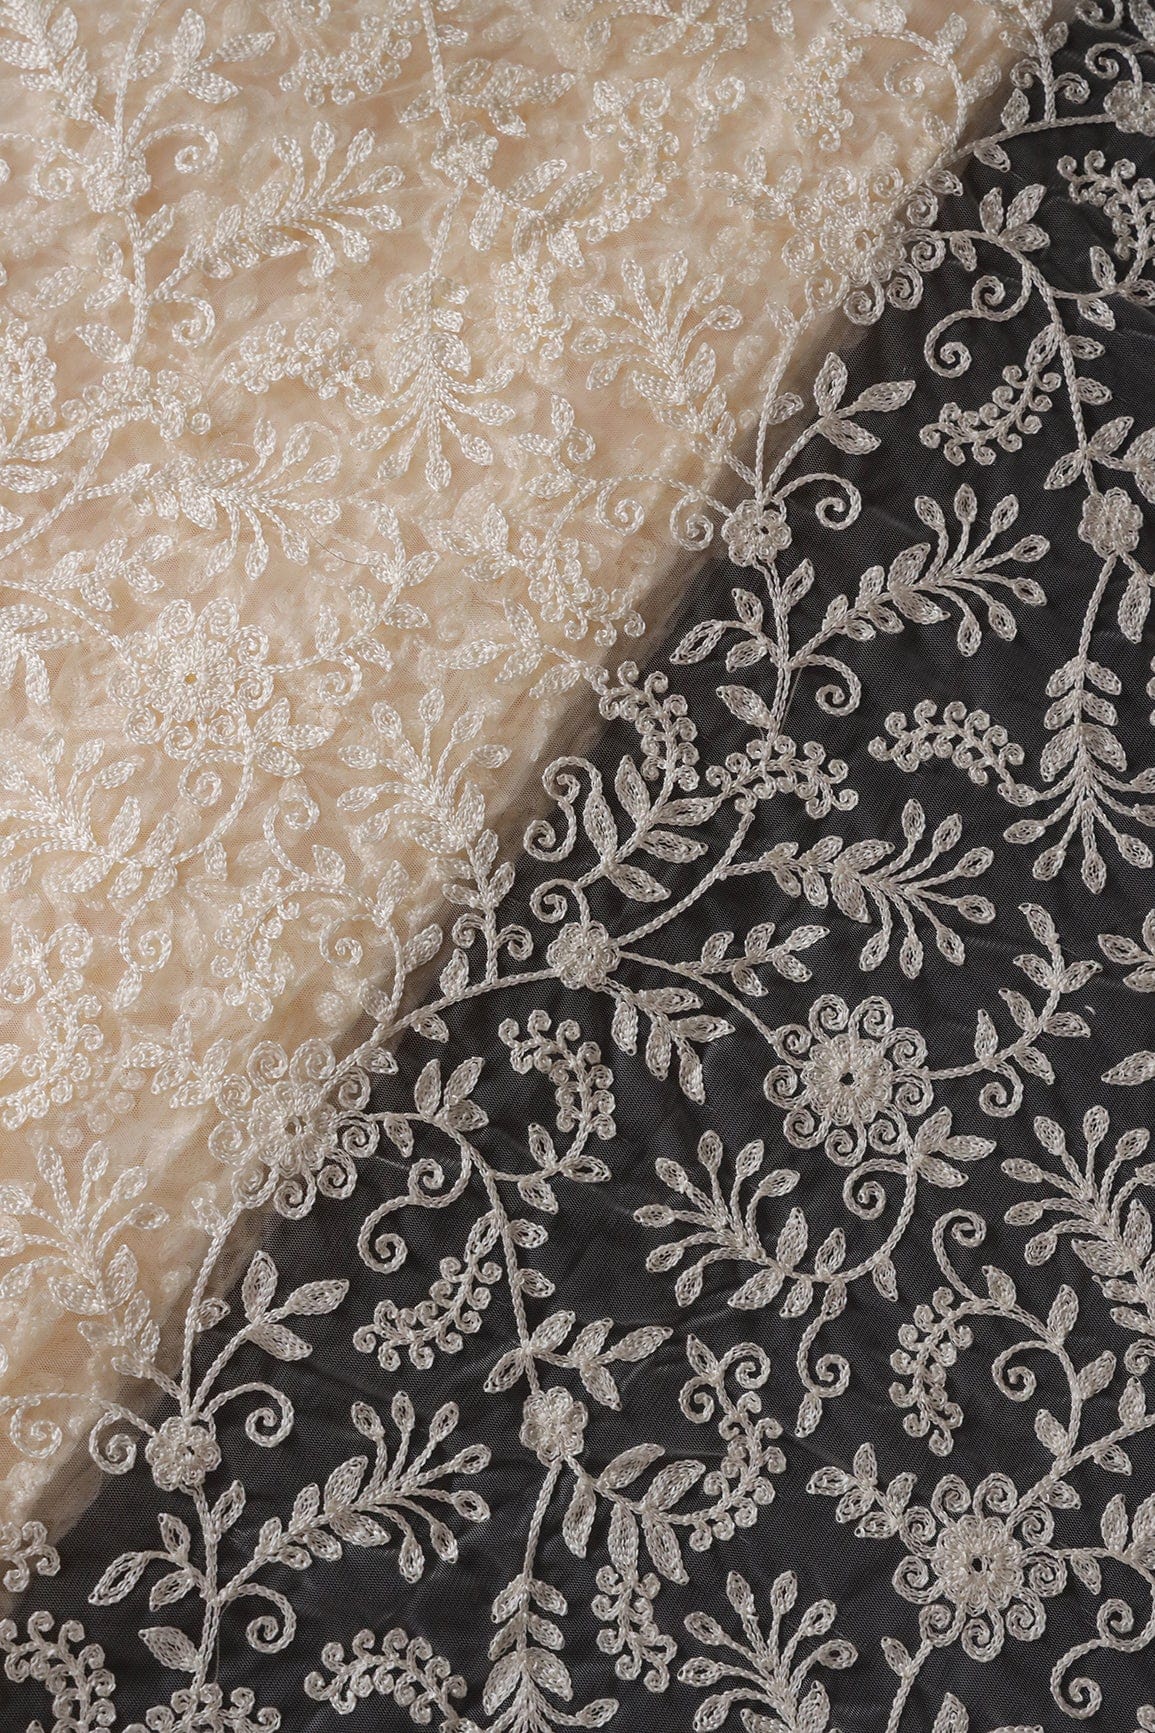 doeraa Embroidery Fabrics Cream Thread Beautiful Heavy Floral Embroidery Work On Cream Soft Net Fabric